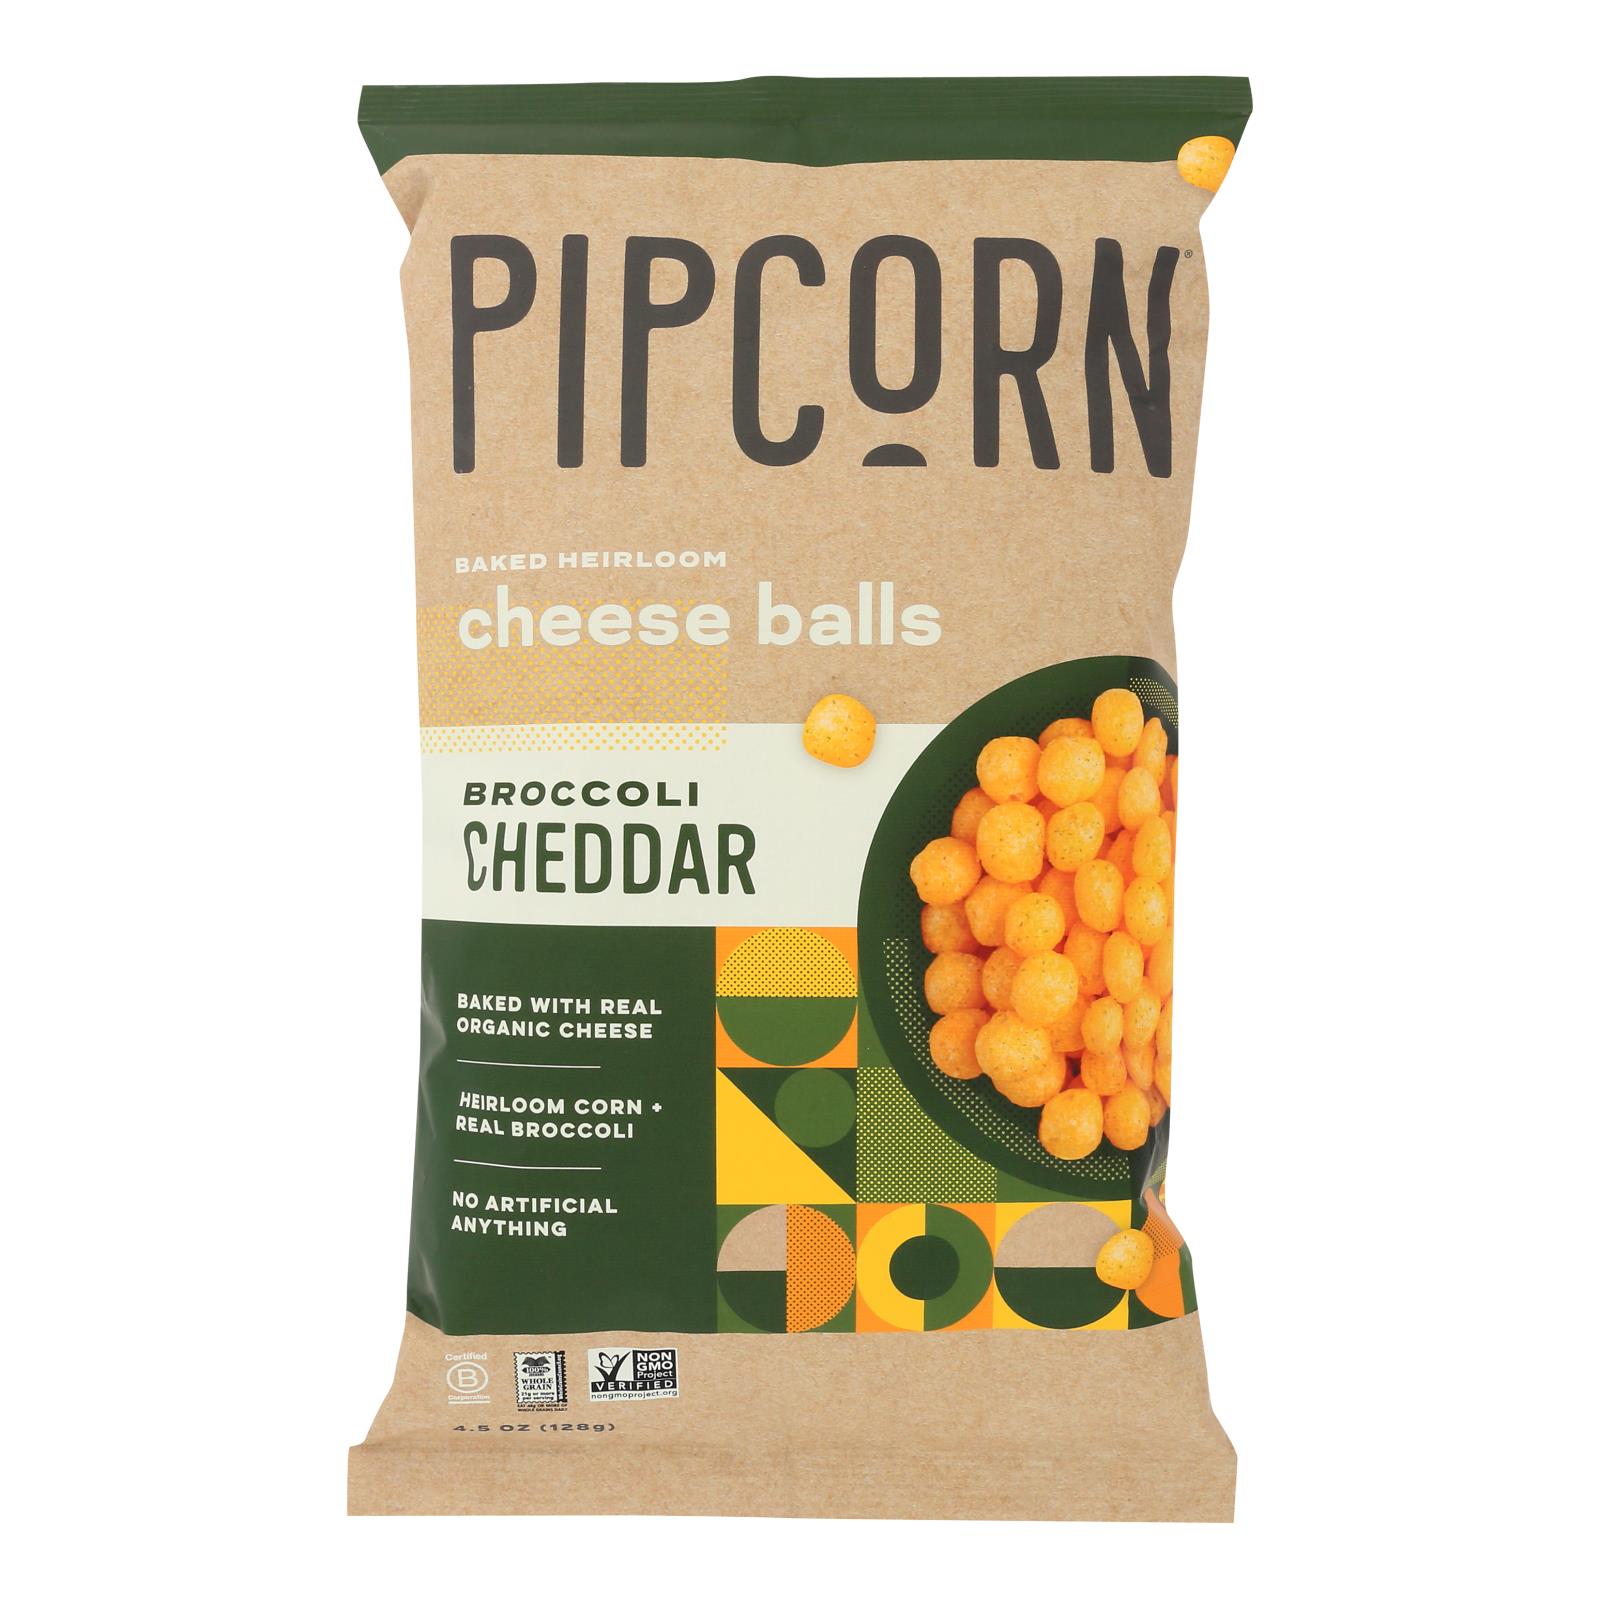 Pipcorn - Chs Balls Broccoli Ched - Case of 12 - 4.5 OZ